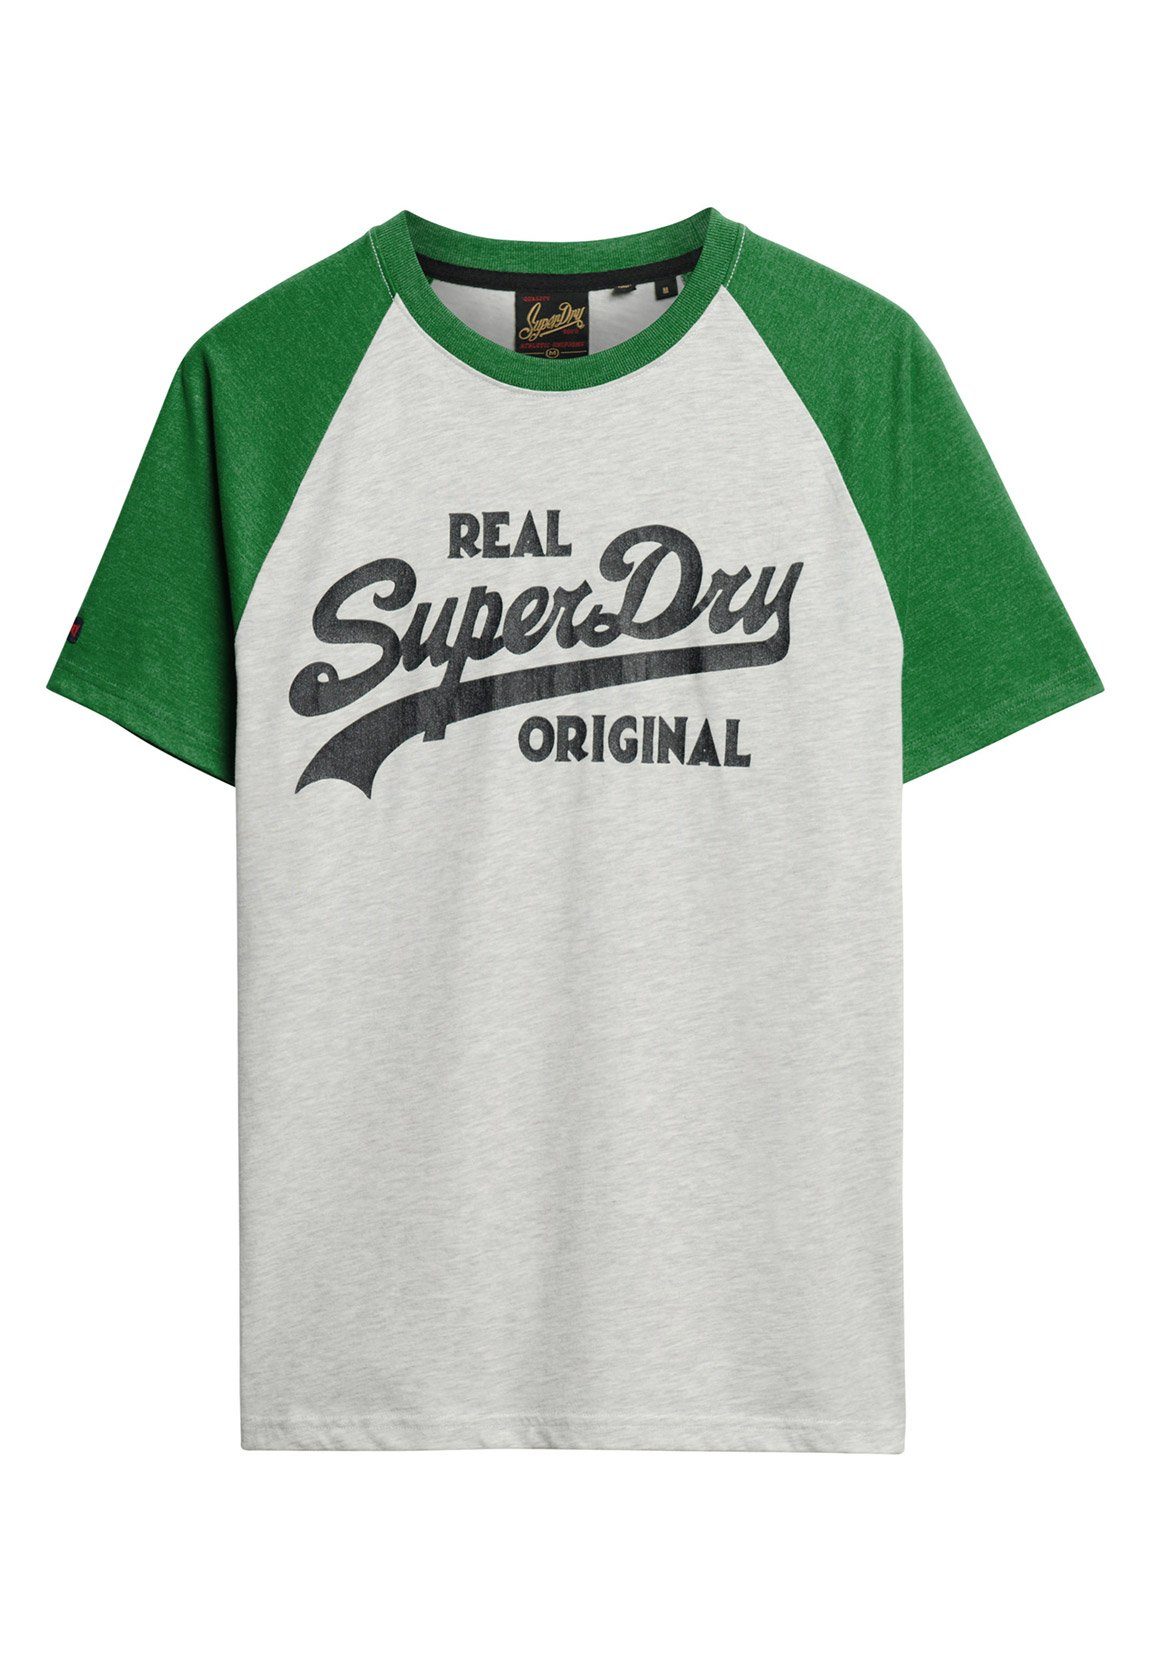 Glacier RAGLAN Marl Grey T-Shirt Superdry Superdry T-Shirt ATHLETIC TEE VL Herren